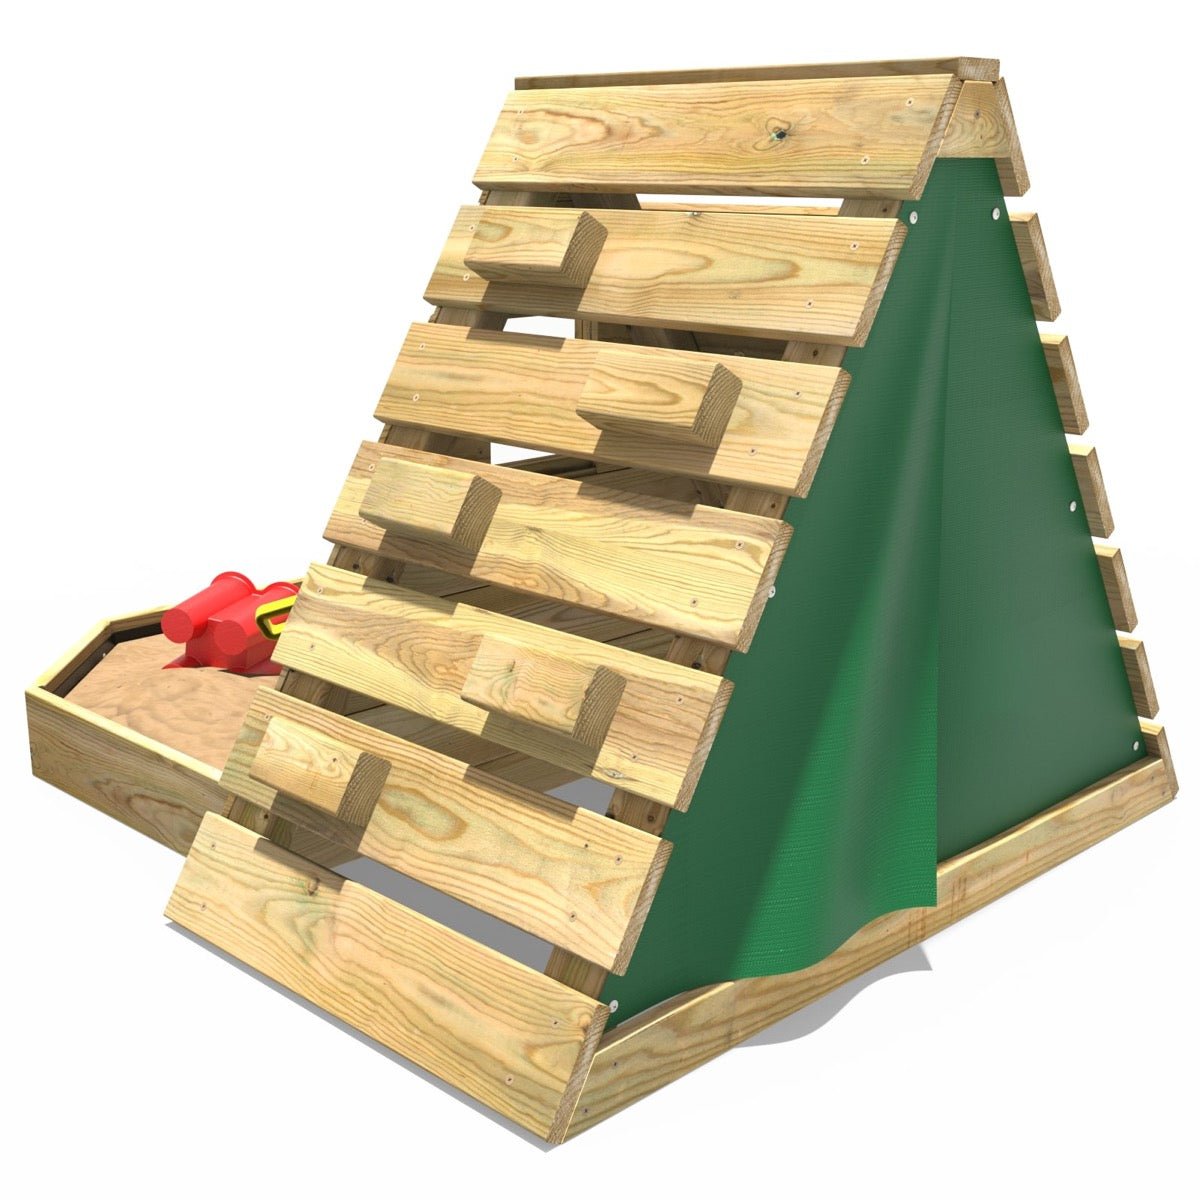 Rebo Mini Wooden Climbing Pyramid Adventure Playset + Sandpit - Green